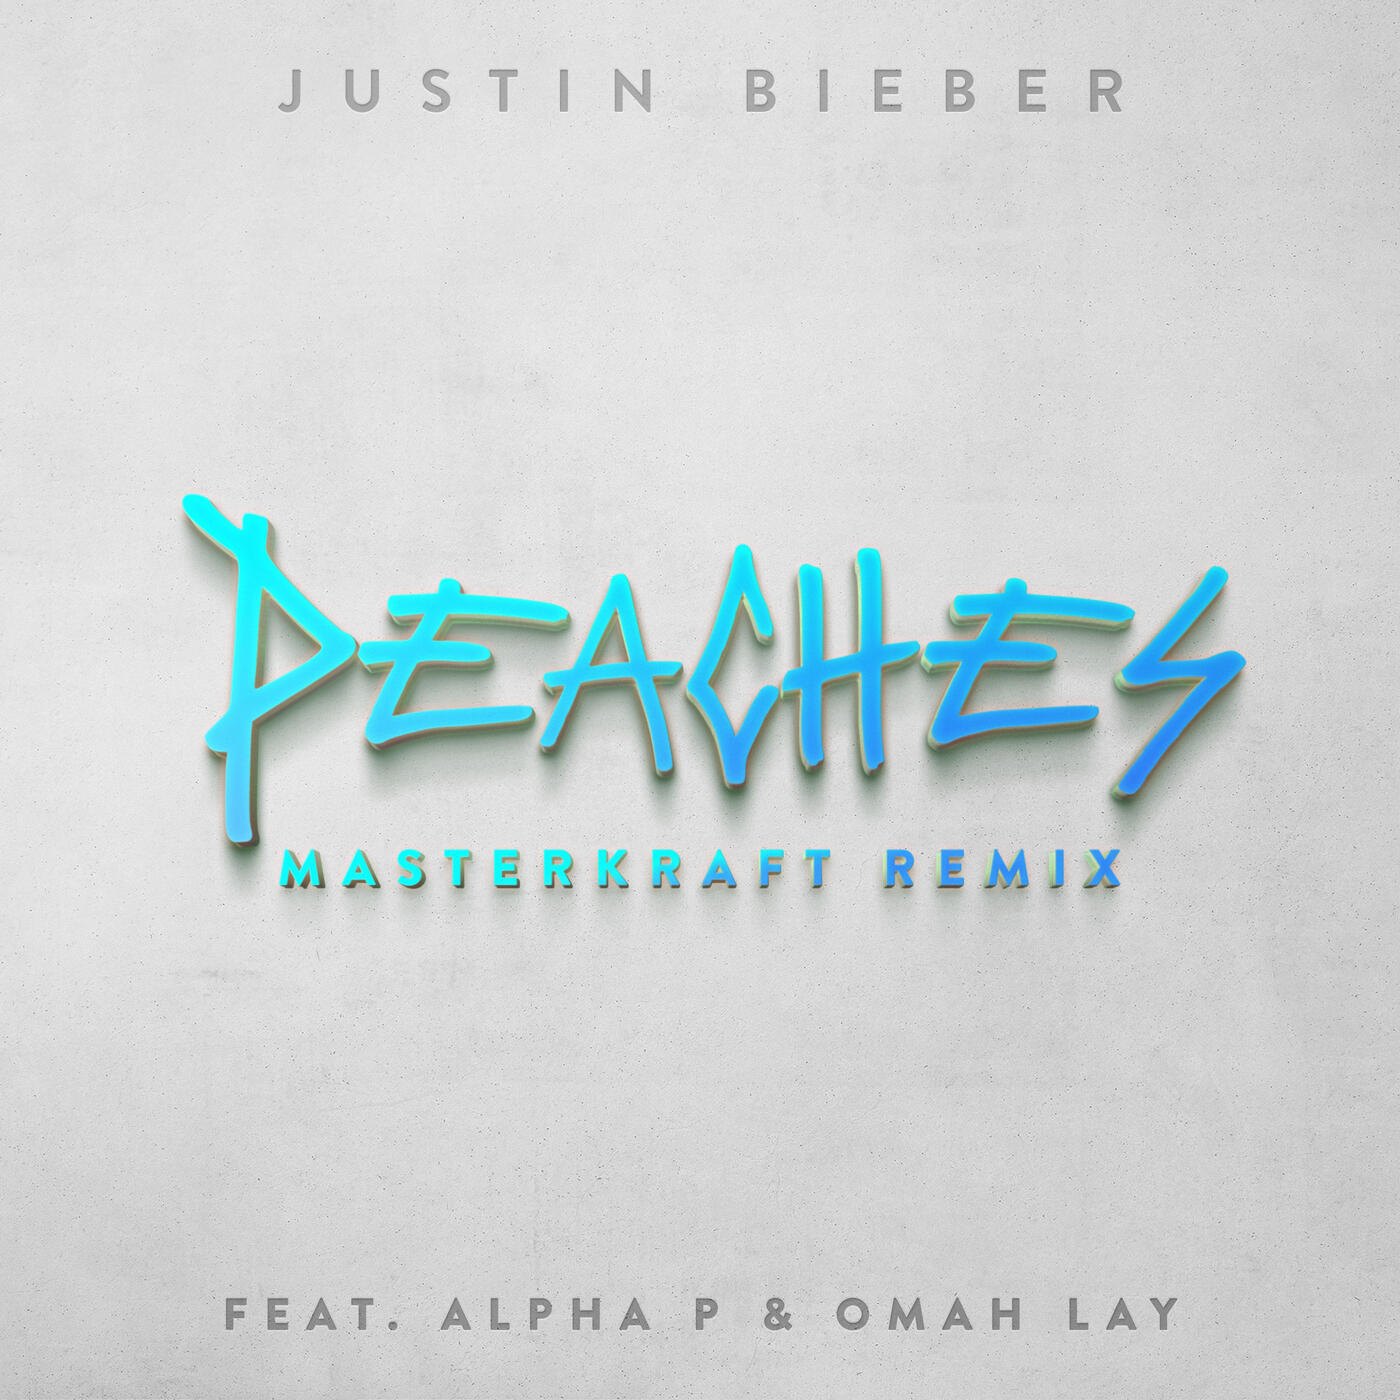 Justin Bieber - Peaches | iHeart